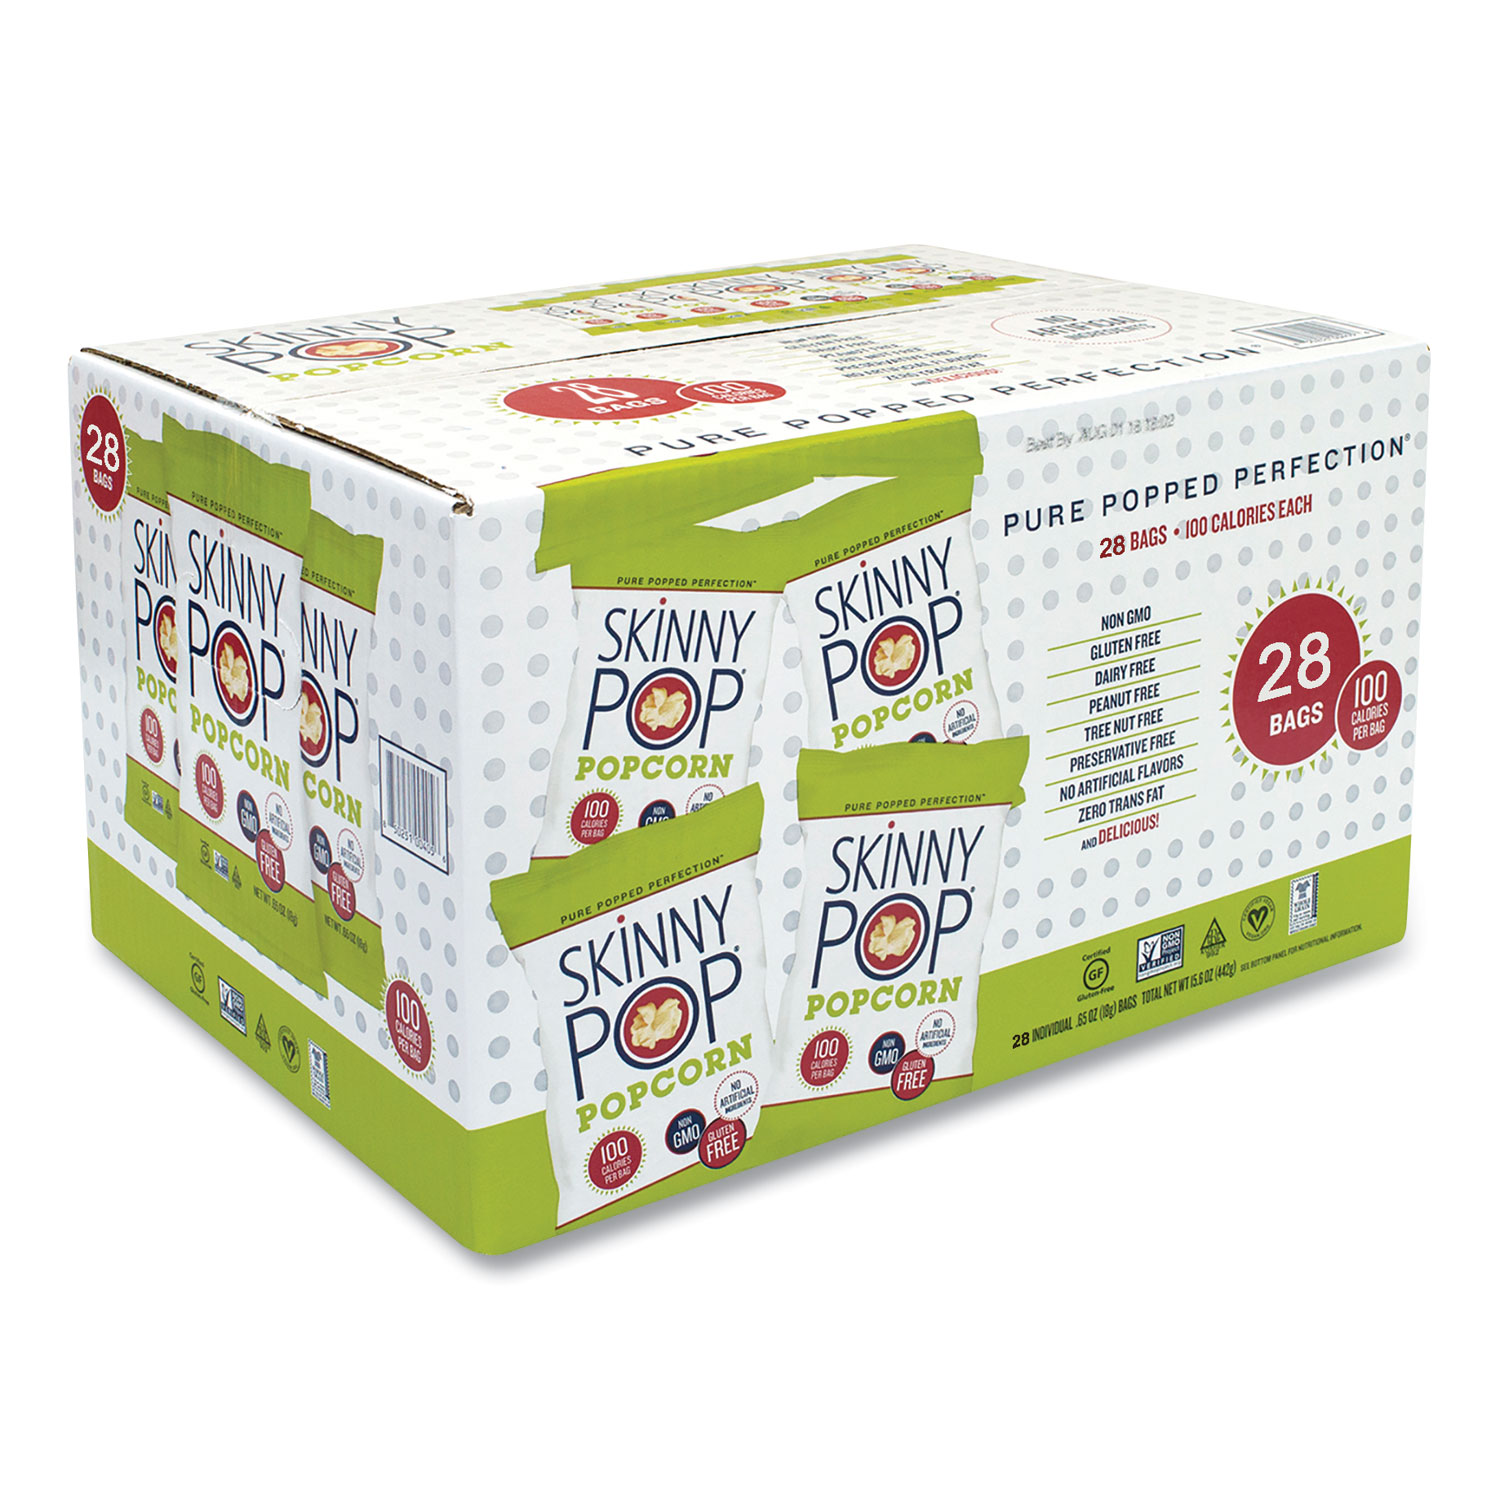 SkinnyPop® Popcorn Popcorn, Original, 0.65 oz Bag, 24/Carton, Free Delivery in 1-4 Business Days